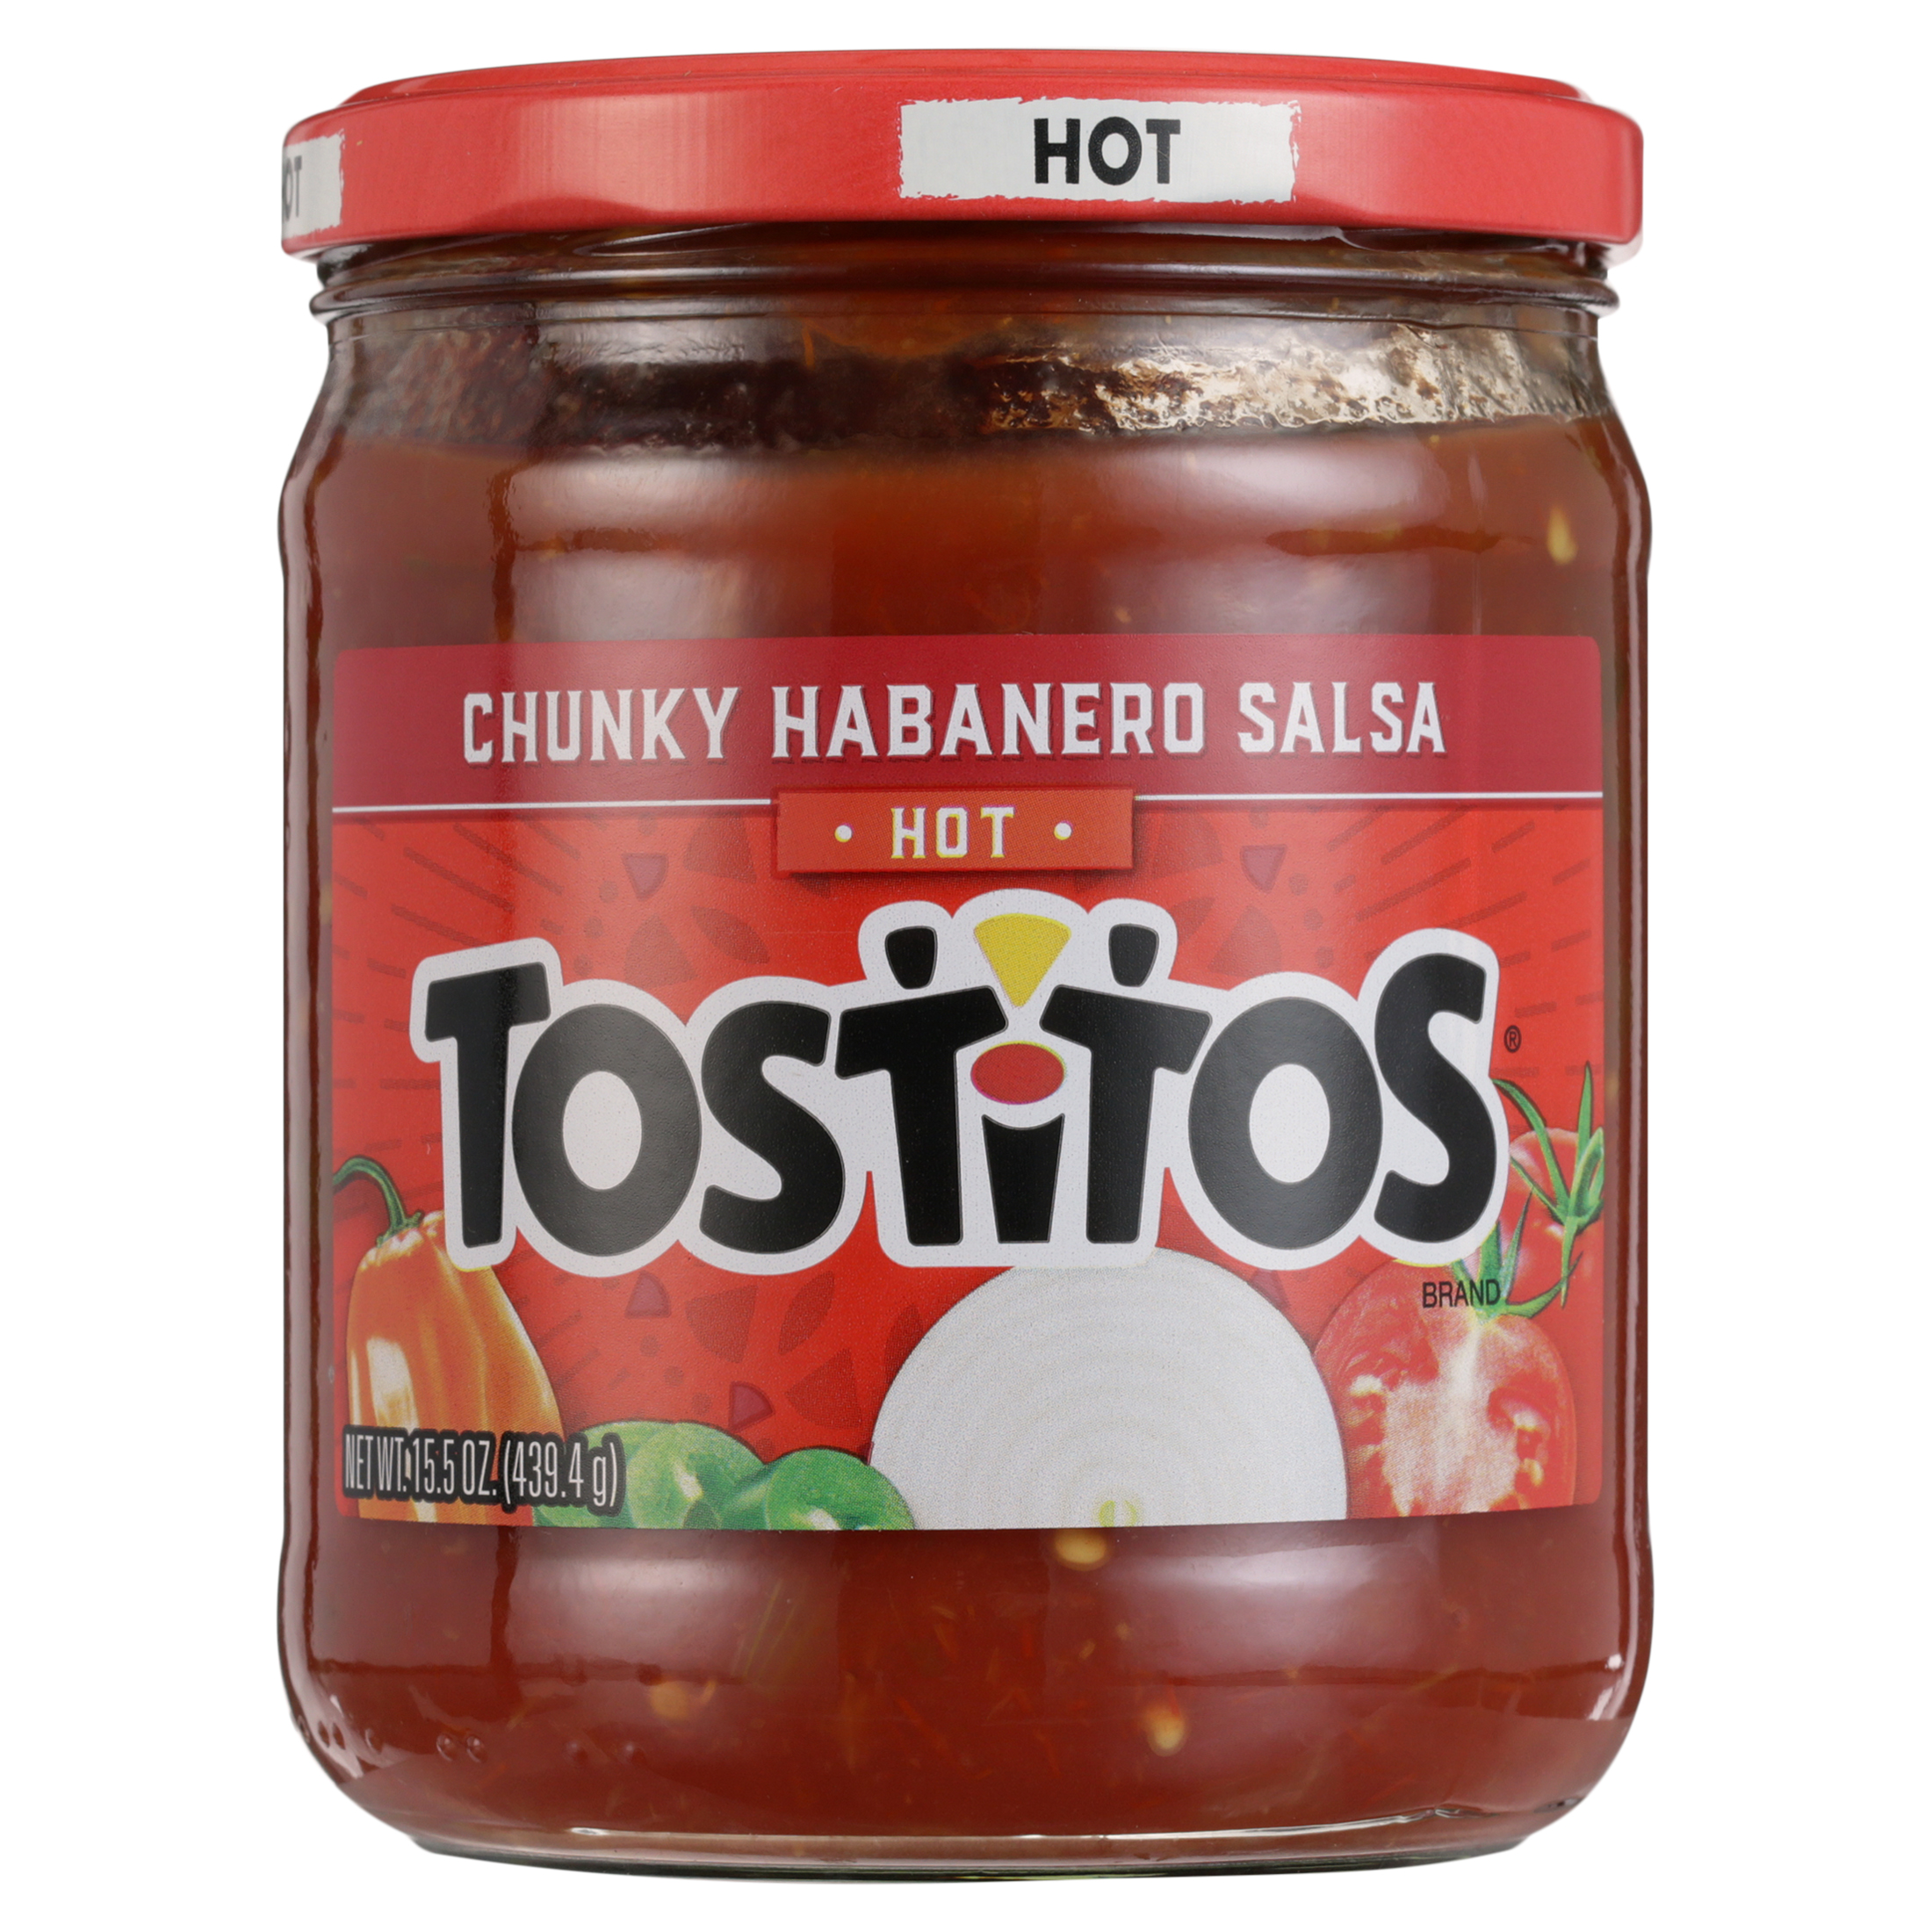 Tostitos Chunky Habanero Salsa, 15.5 oz, Single Jar pack - image 7 of 9